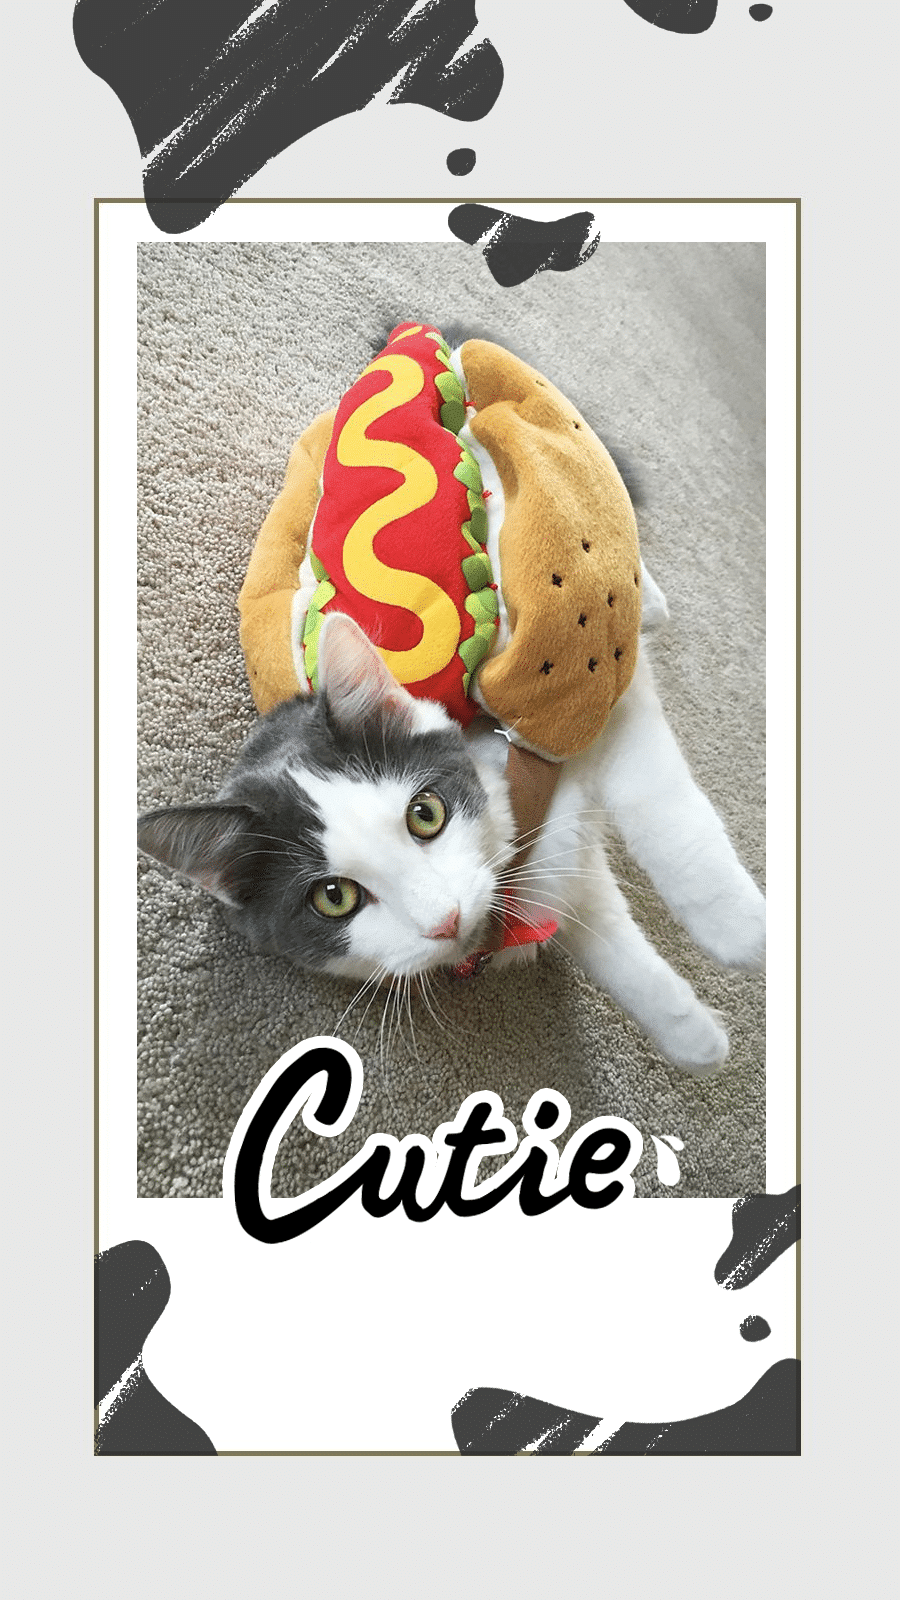 Cutie Cat Record Display Instagram Story